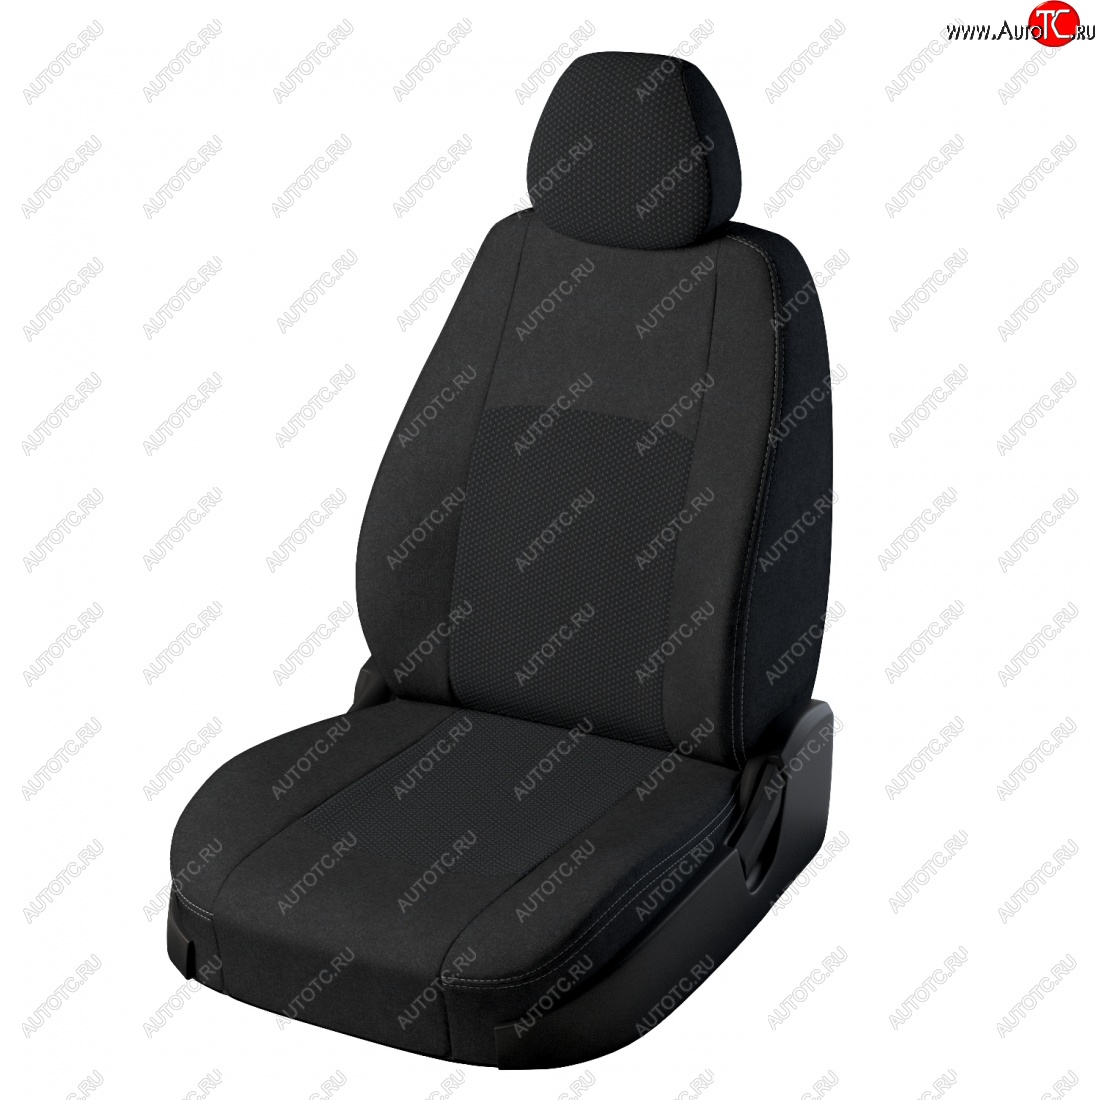 4 199 р. Чехлы для сидений Lord Autofashion Турин (жаккард) Hyundai Sonata EF рестайлинг ТагАЗ (2001-2013) (Чёрный, вставка Эльбрус)